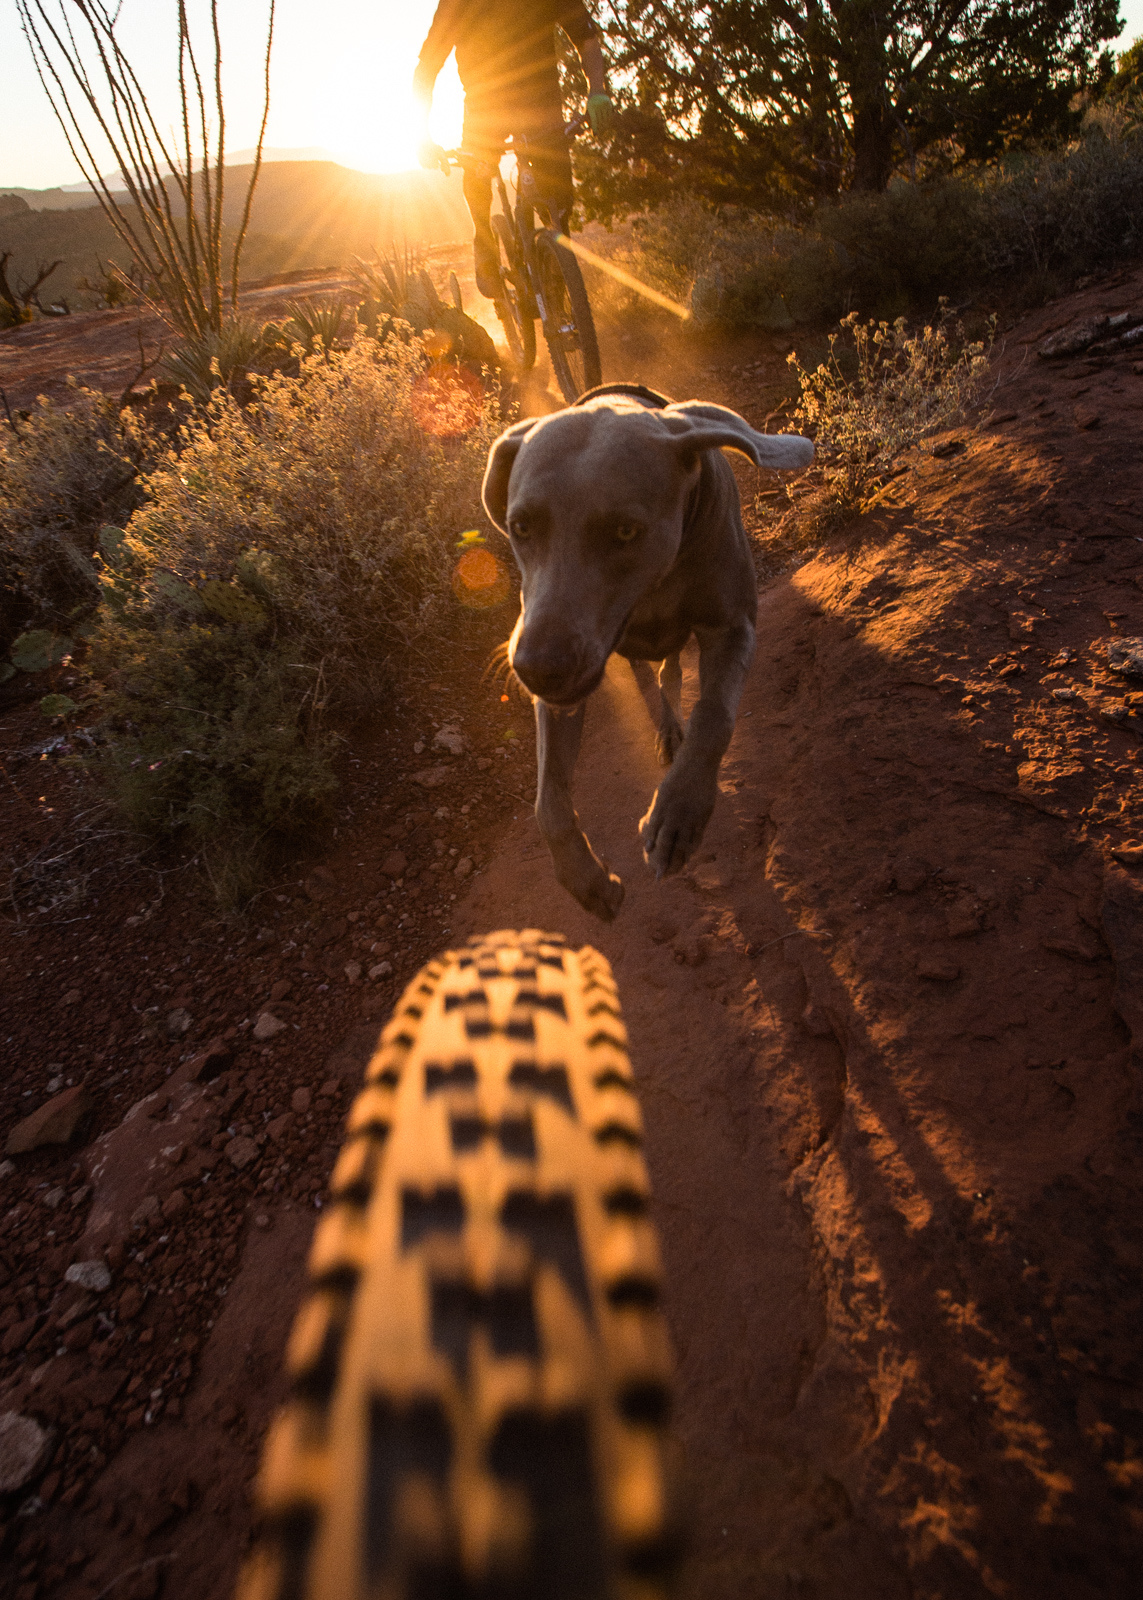 Mountain Biking around Sedona, Arizona with a few locals and their dogs.